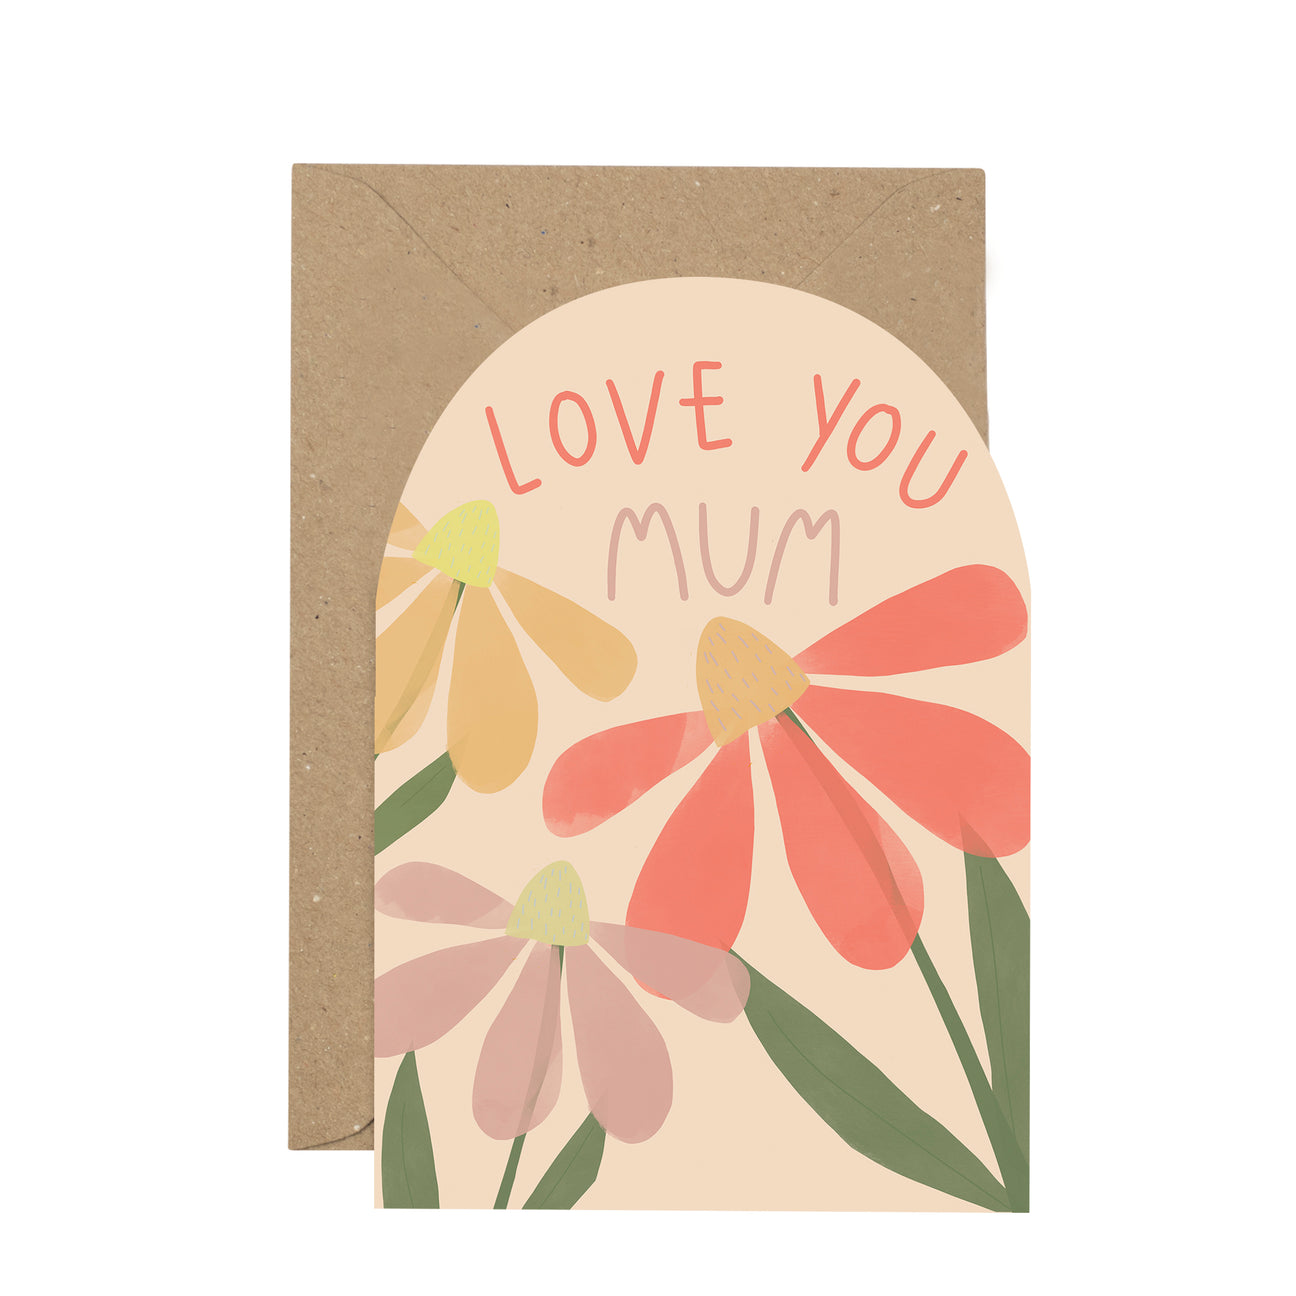 'Love You Mum' Card By Plewsy